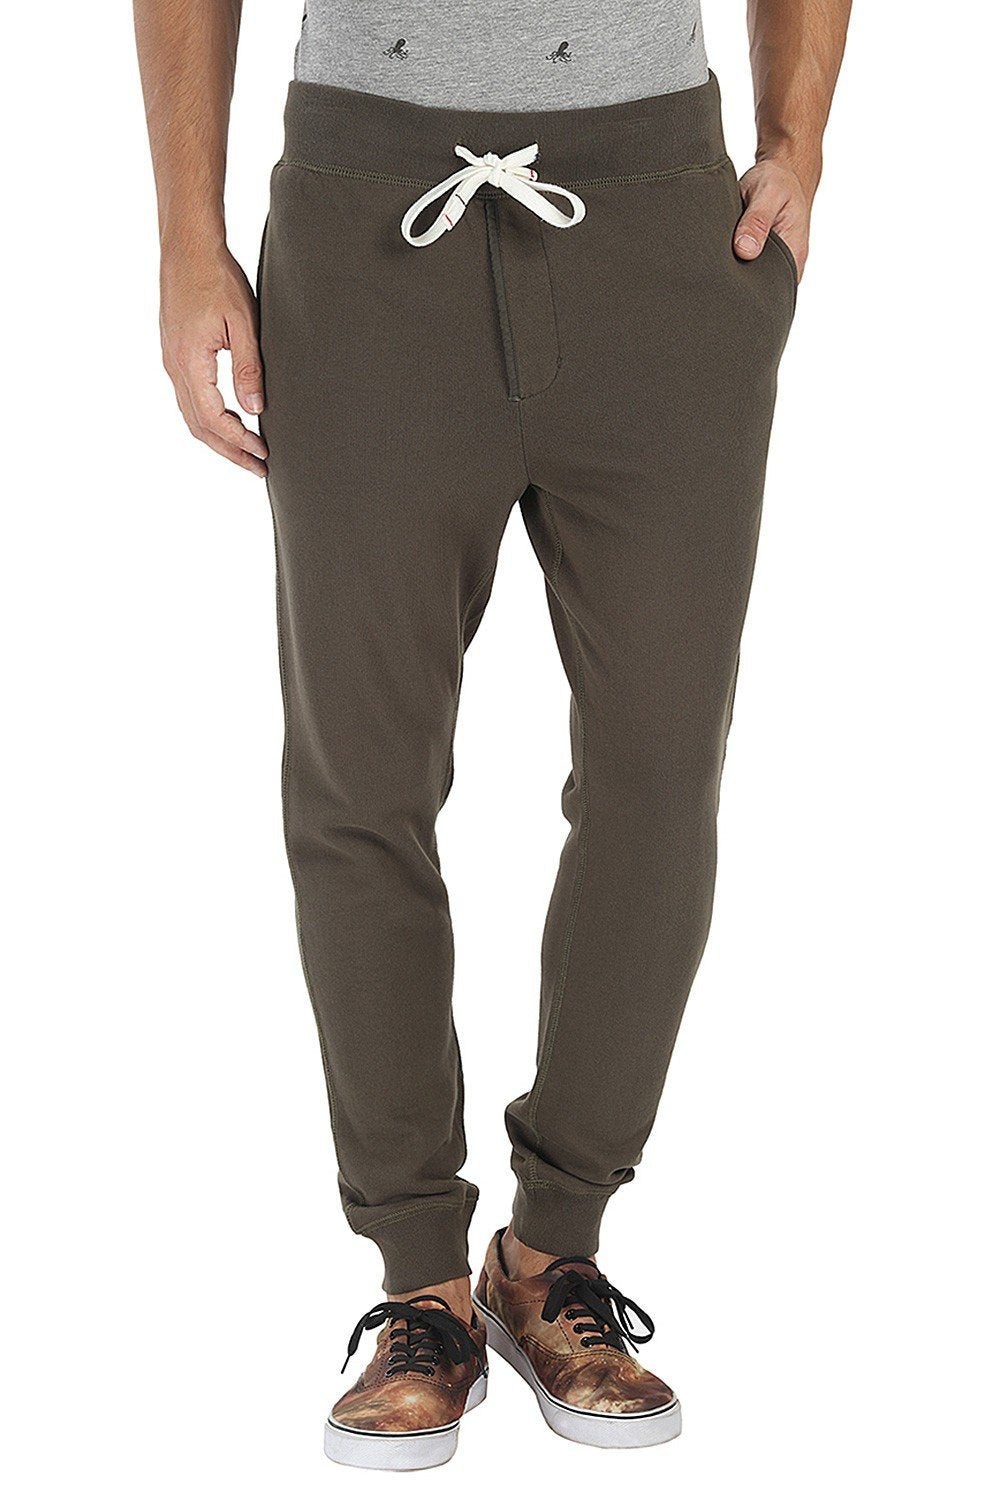 Buy Online Olive Green Fleece Slim Fit Cuff Jogger Sweatpants for Men ...